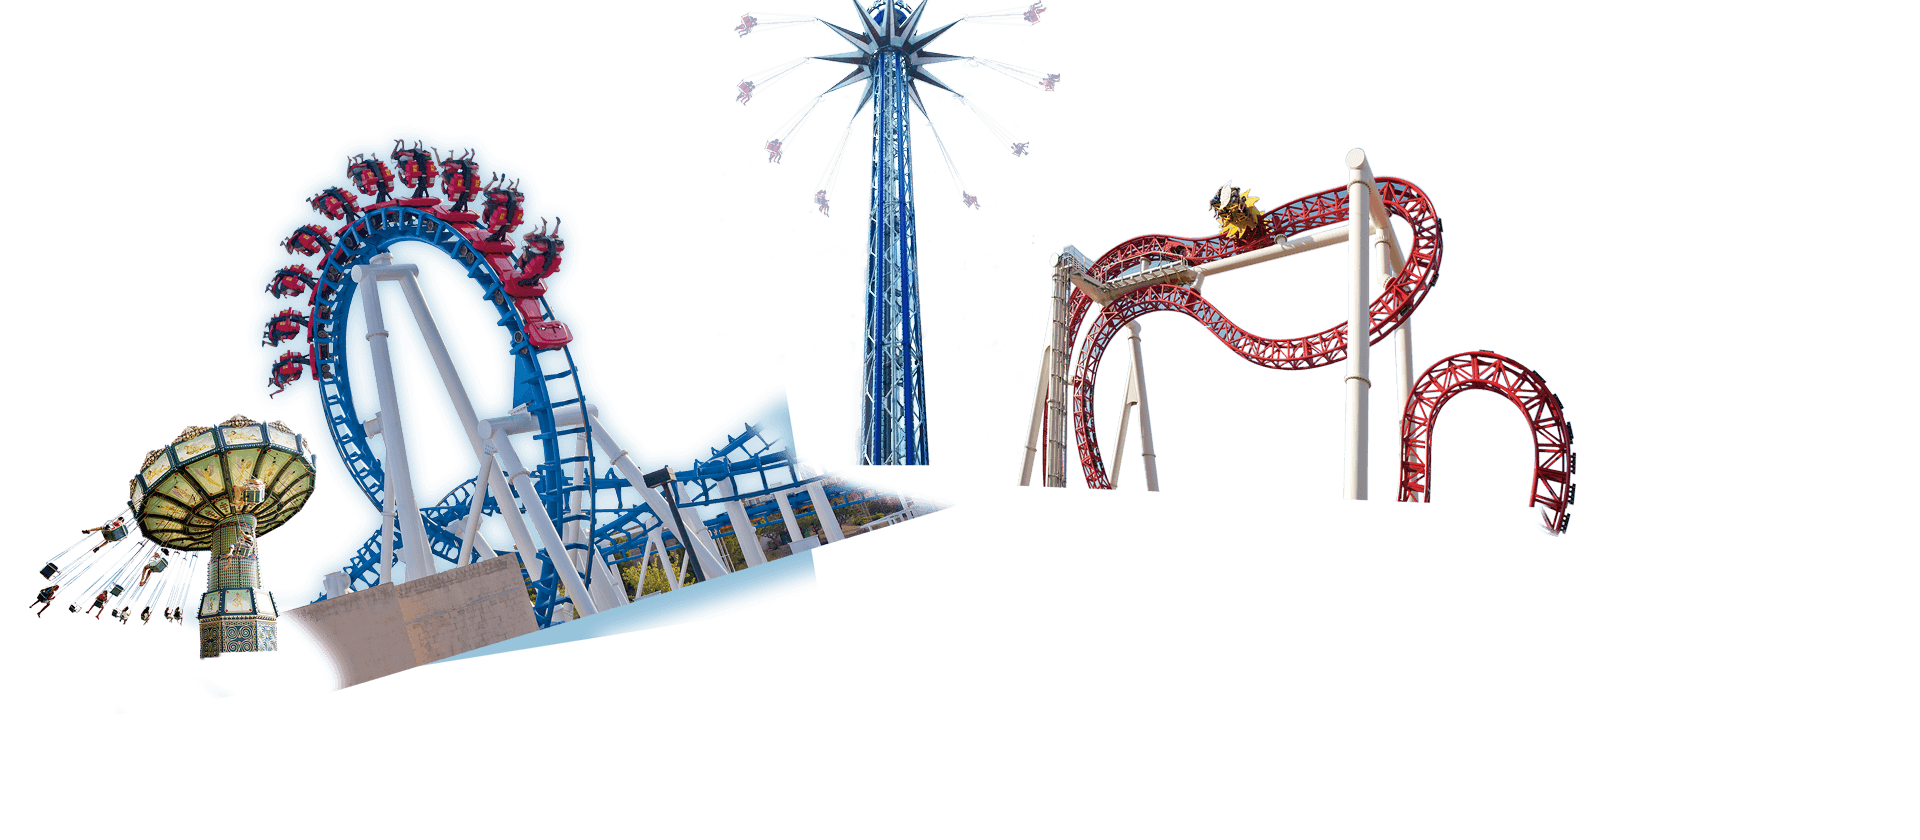 Amusement Park Image Free Download Image PNG Image